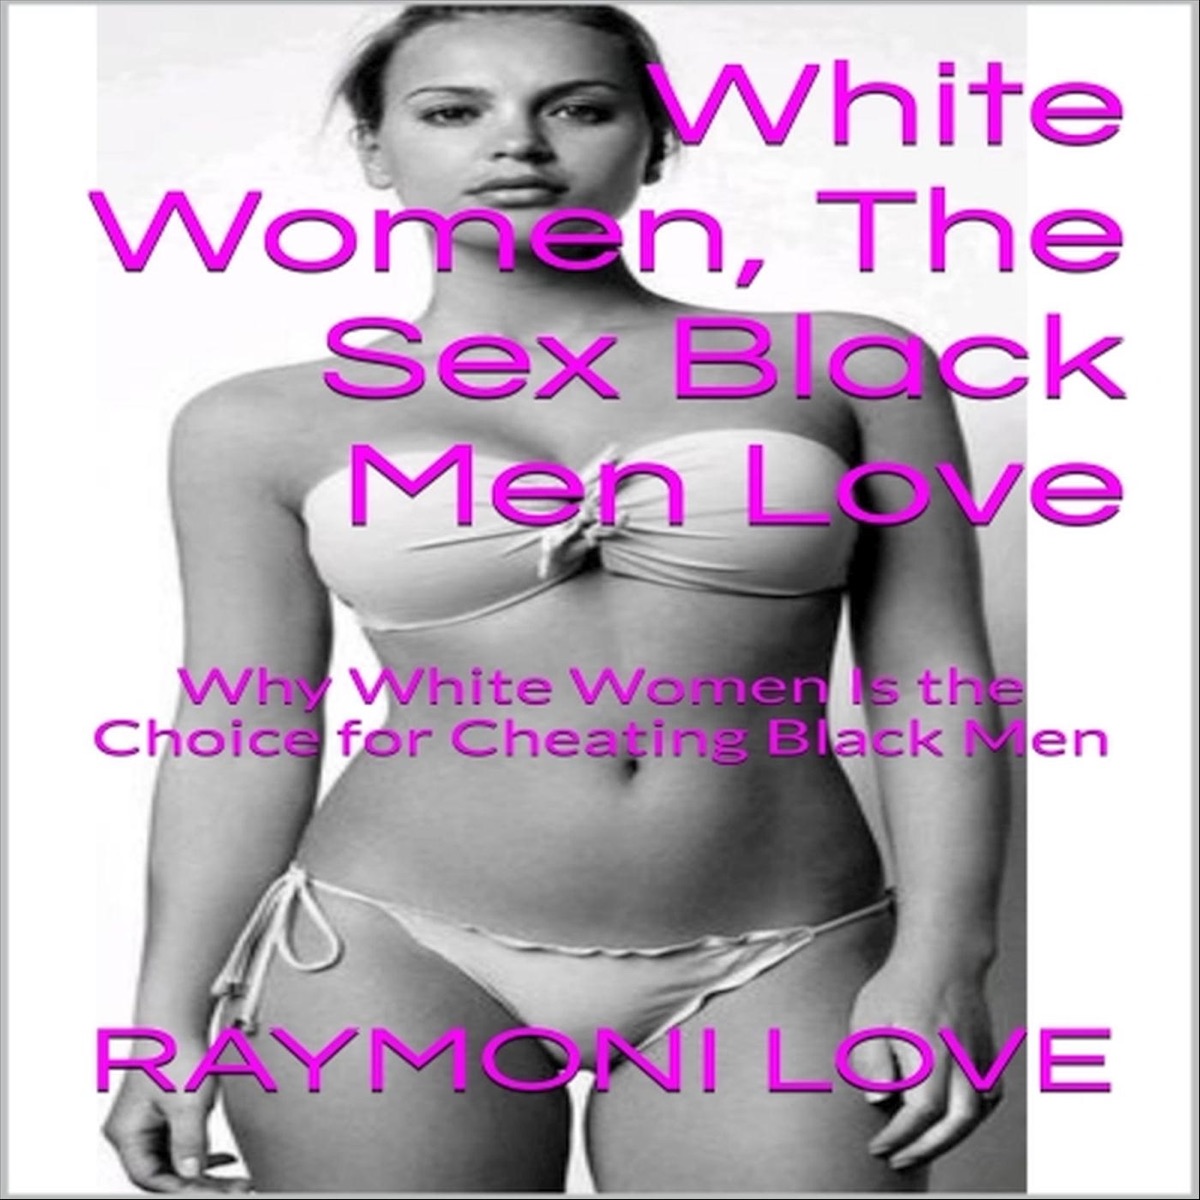 White Women, The Sex Black Men Love (Why White Women Is the Choice for Cheating Black Men) - EP - Album by Raymoni Love pic pic